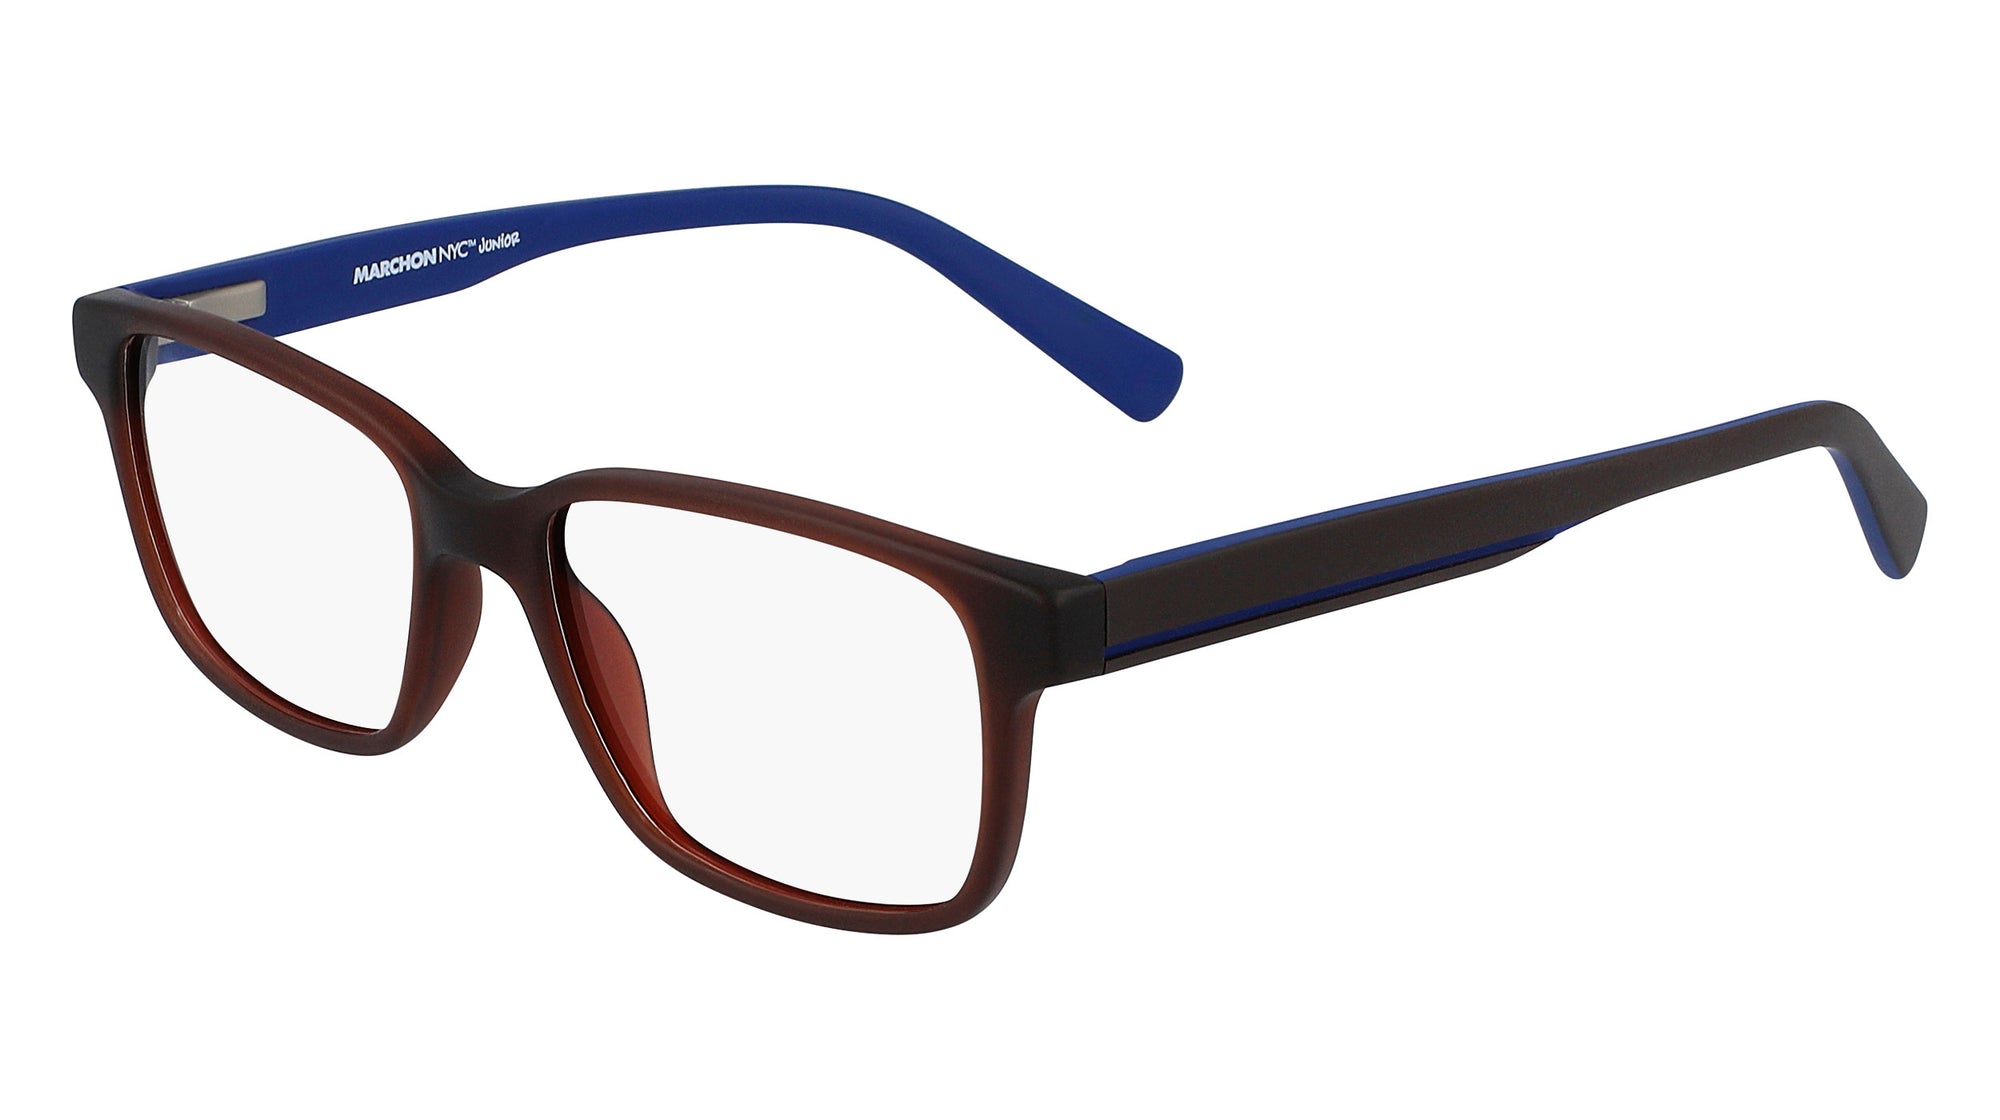 Marchon Eyeglasses M-6500 - Go-Readers.com